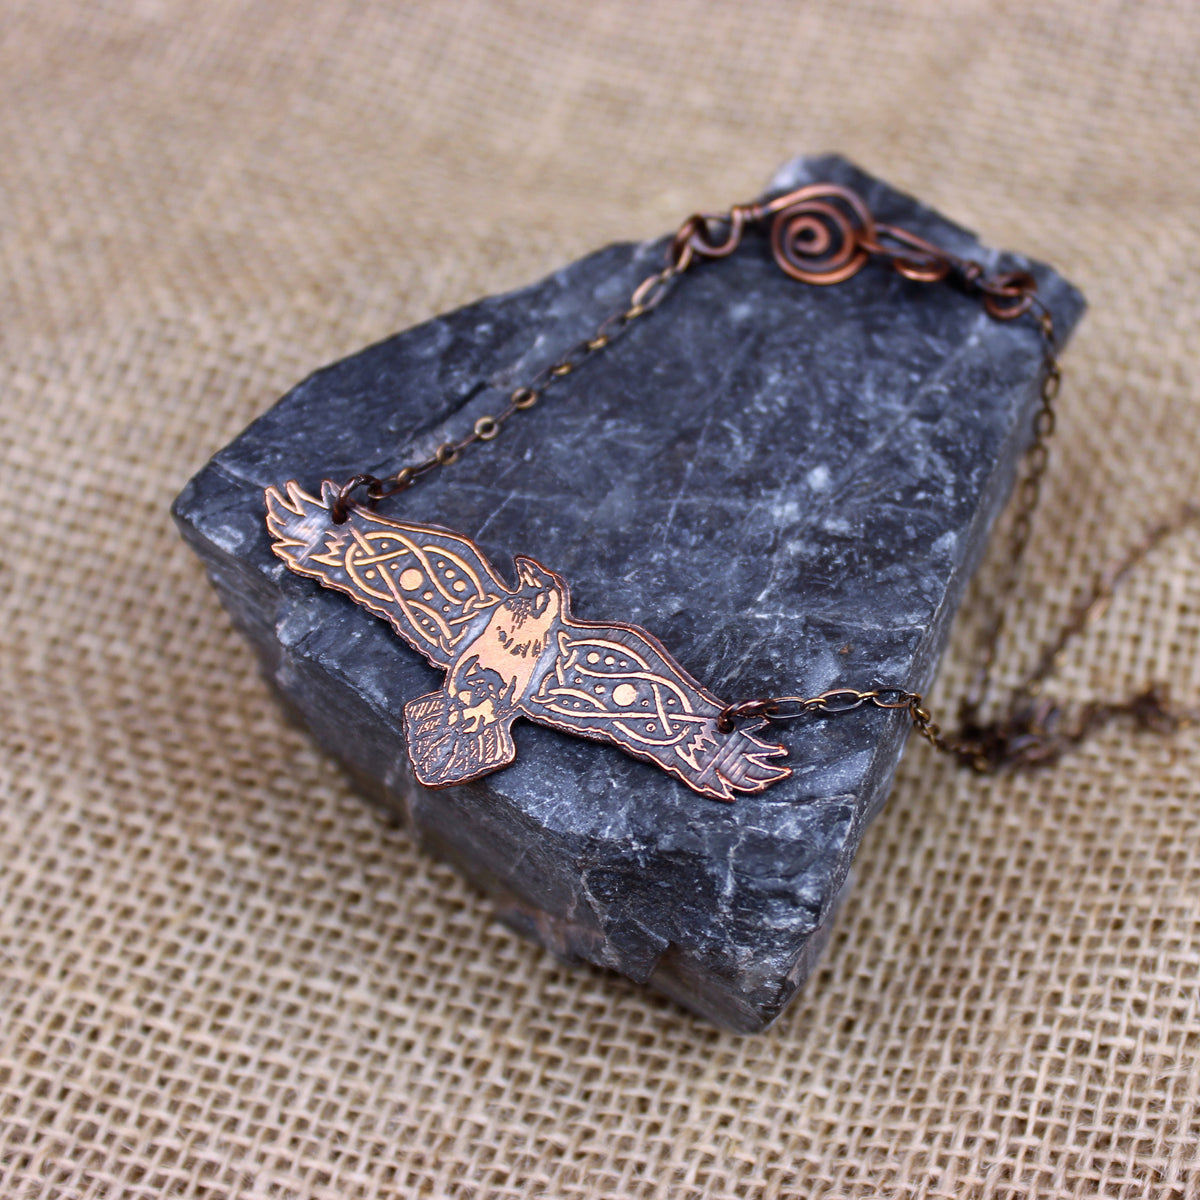 Copper raven pendant